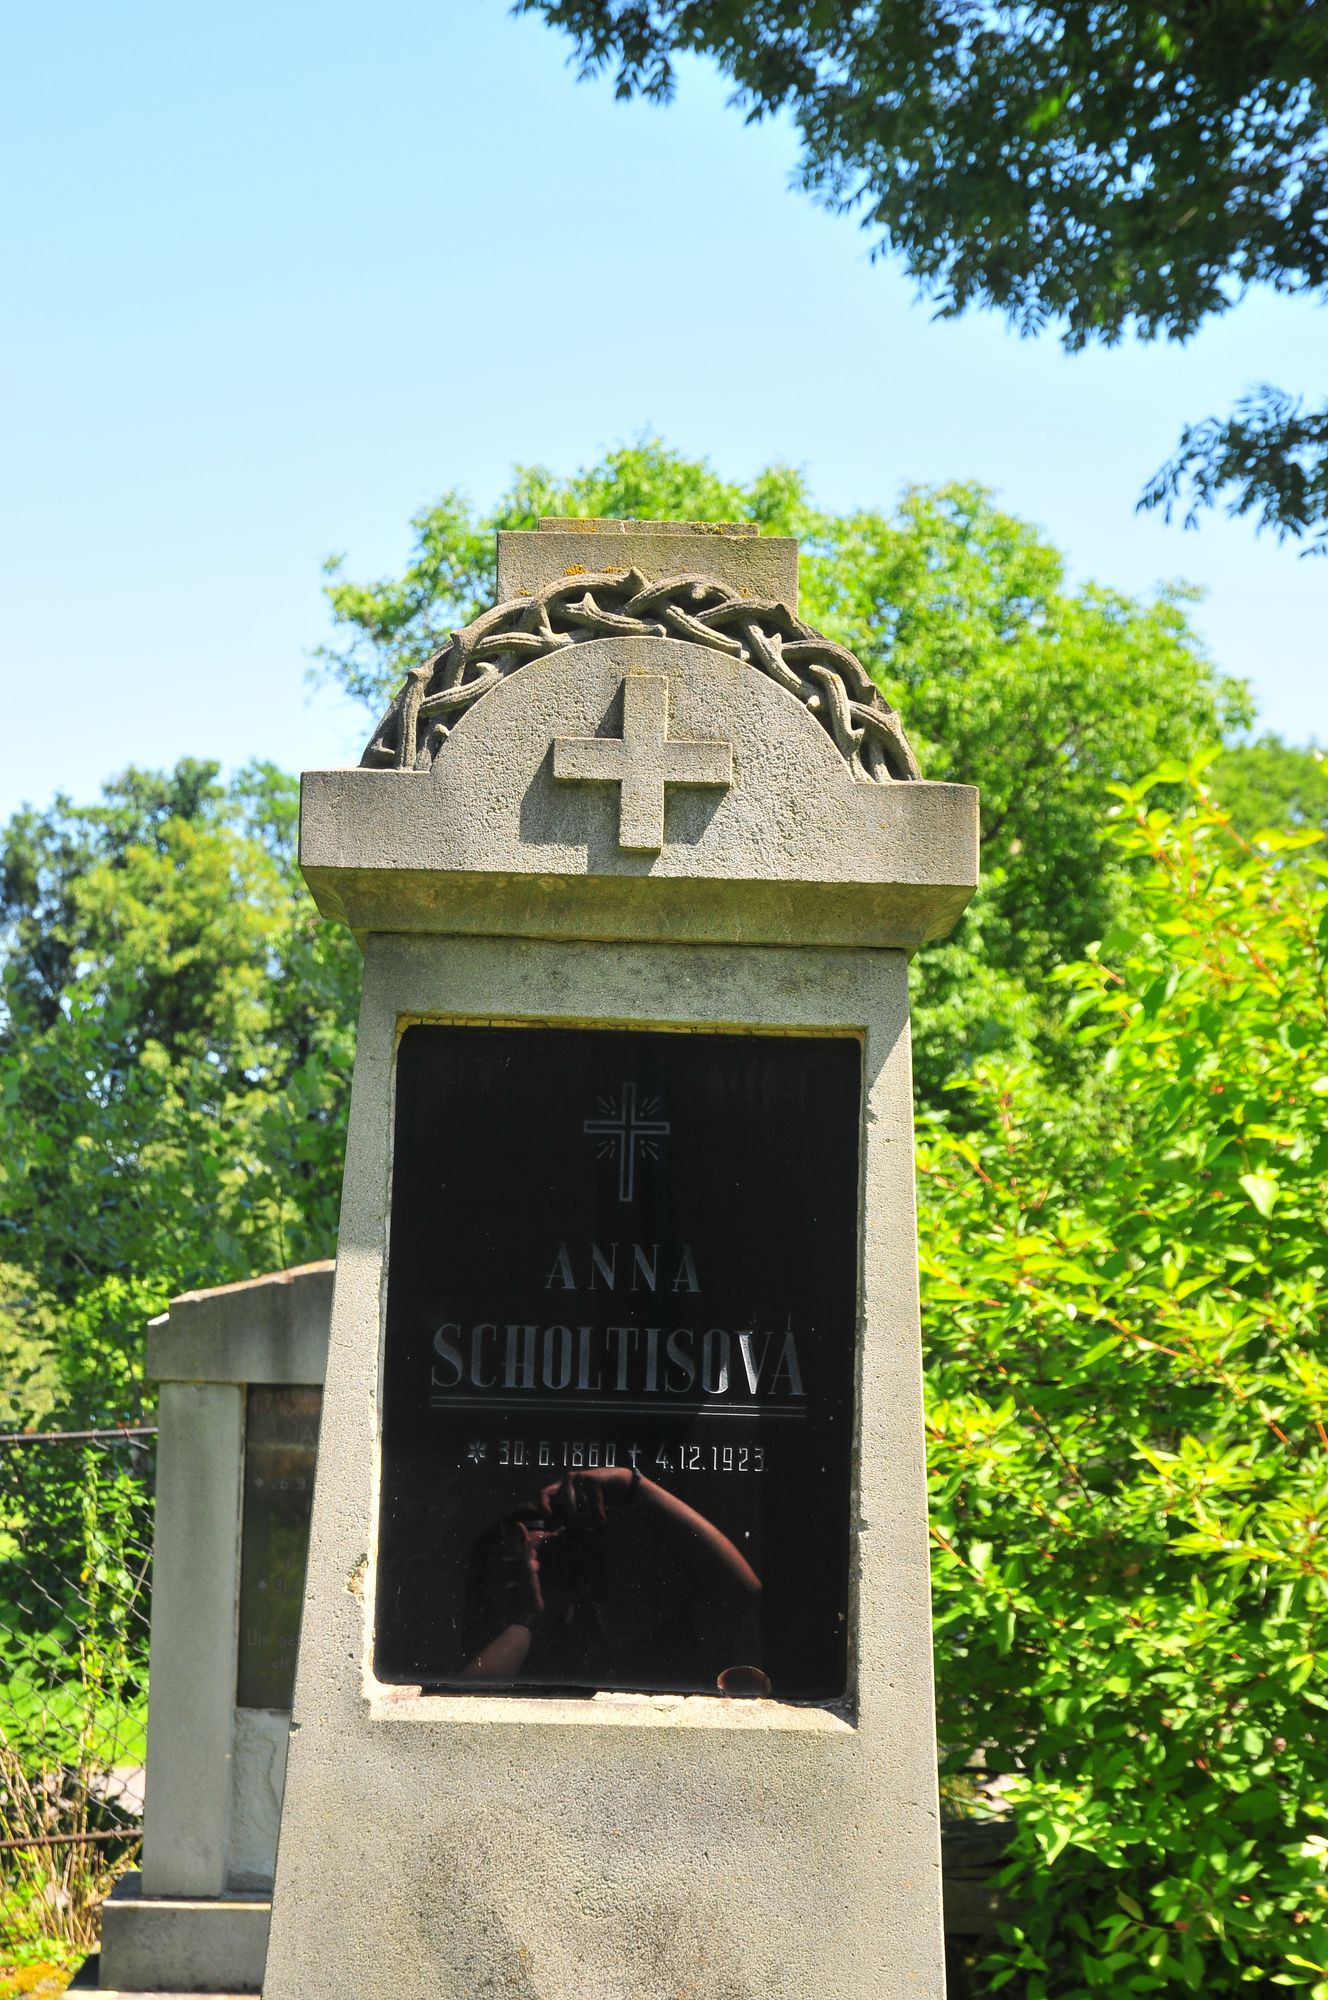 Tombstone of Anna Sholtisova, cemetery in Ligotka Kameralna, state from 2022